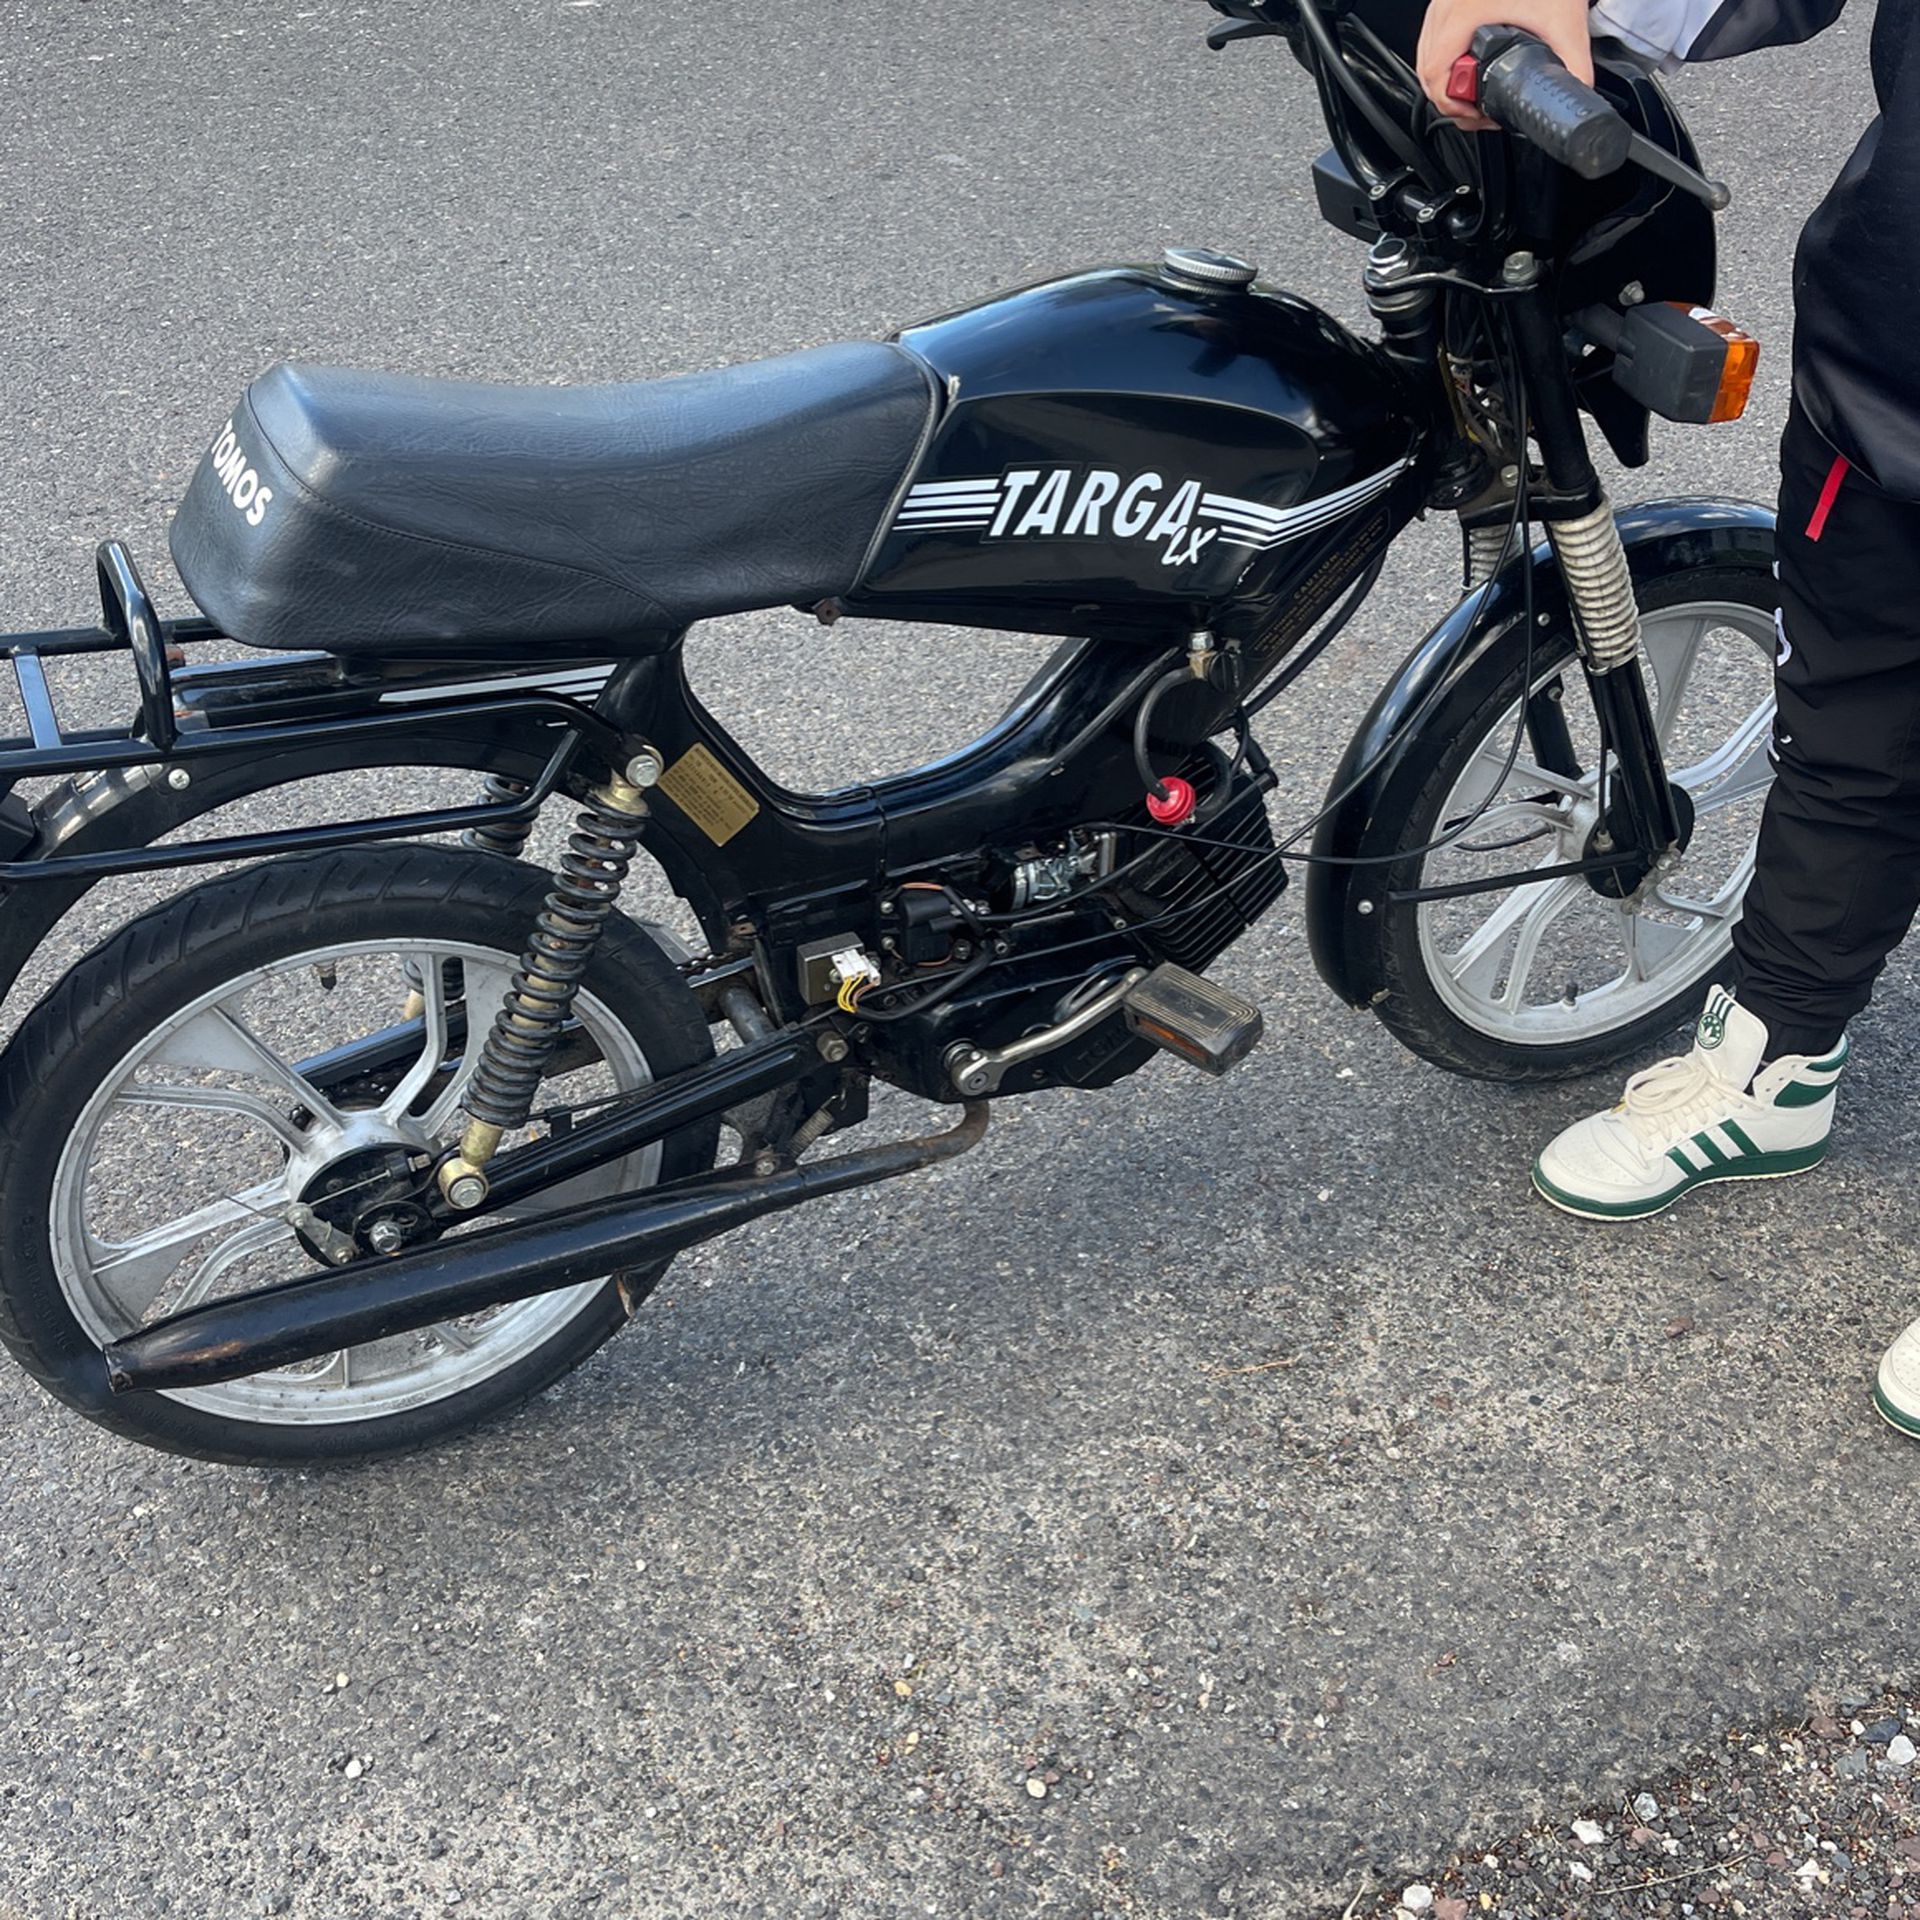 Targa Lx Tomos Moped 